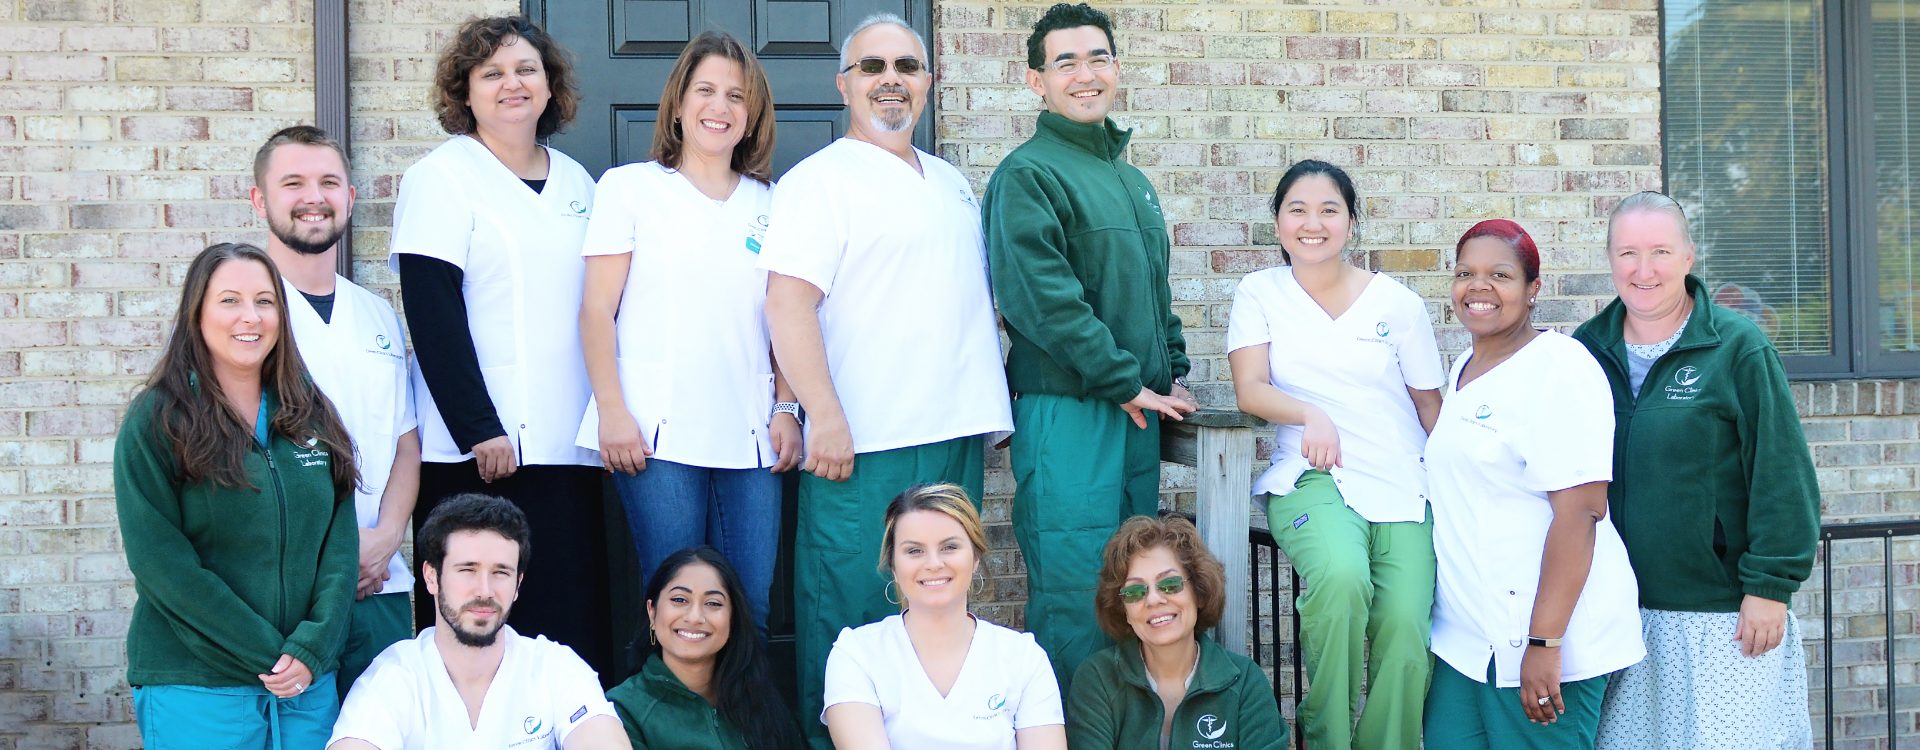 Green clinics team photo